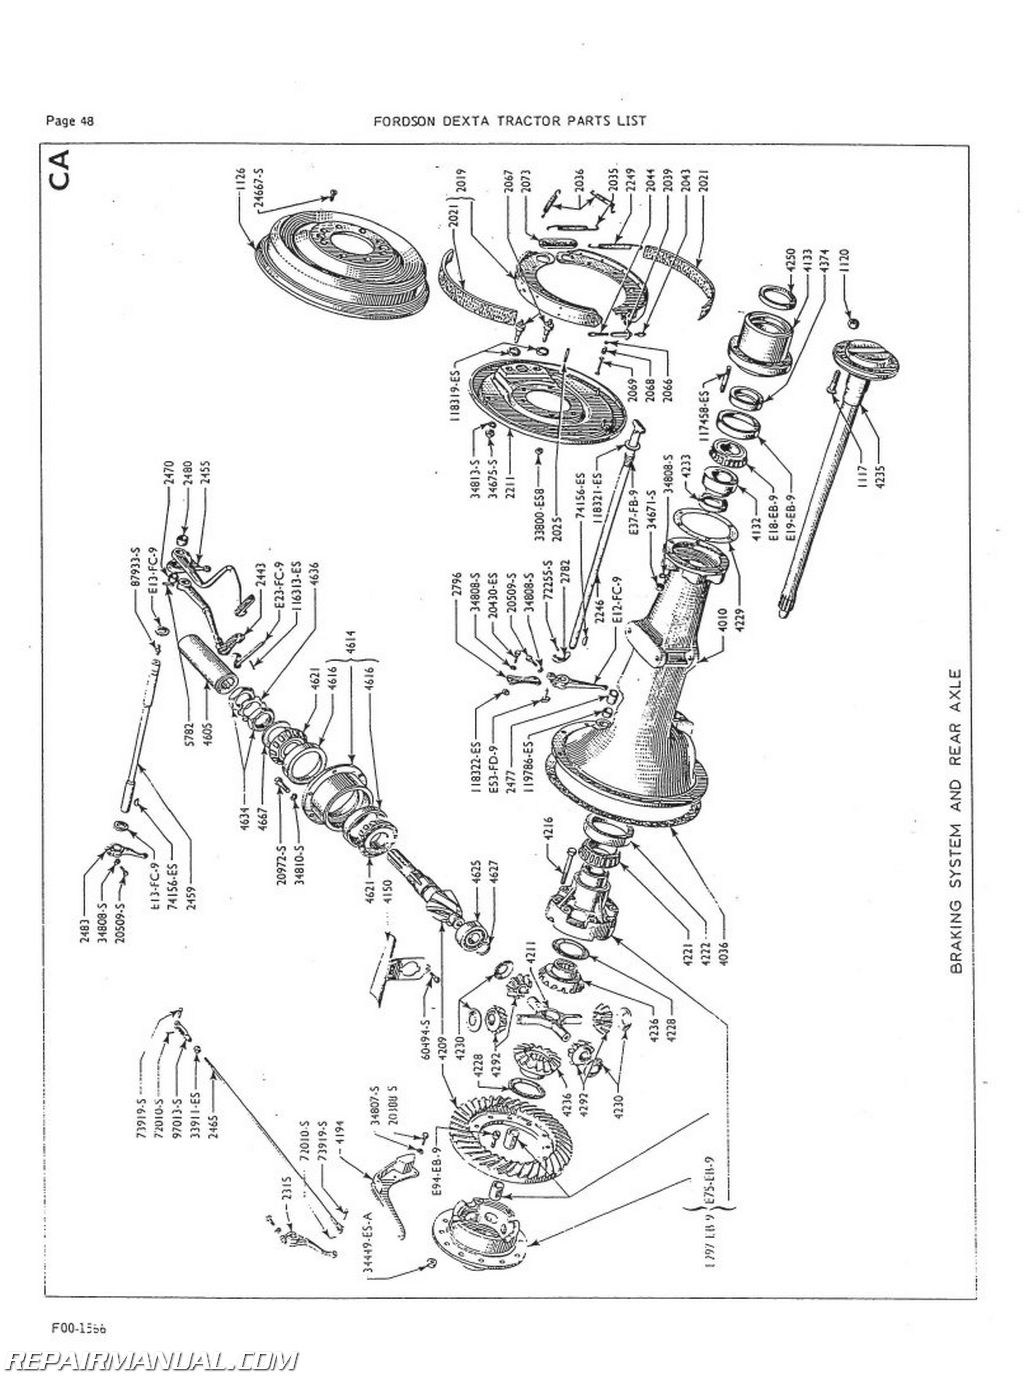 Picture of: Fordson Dexta And Super Dexta Parts Manual